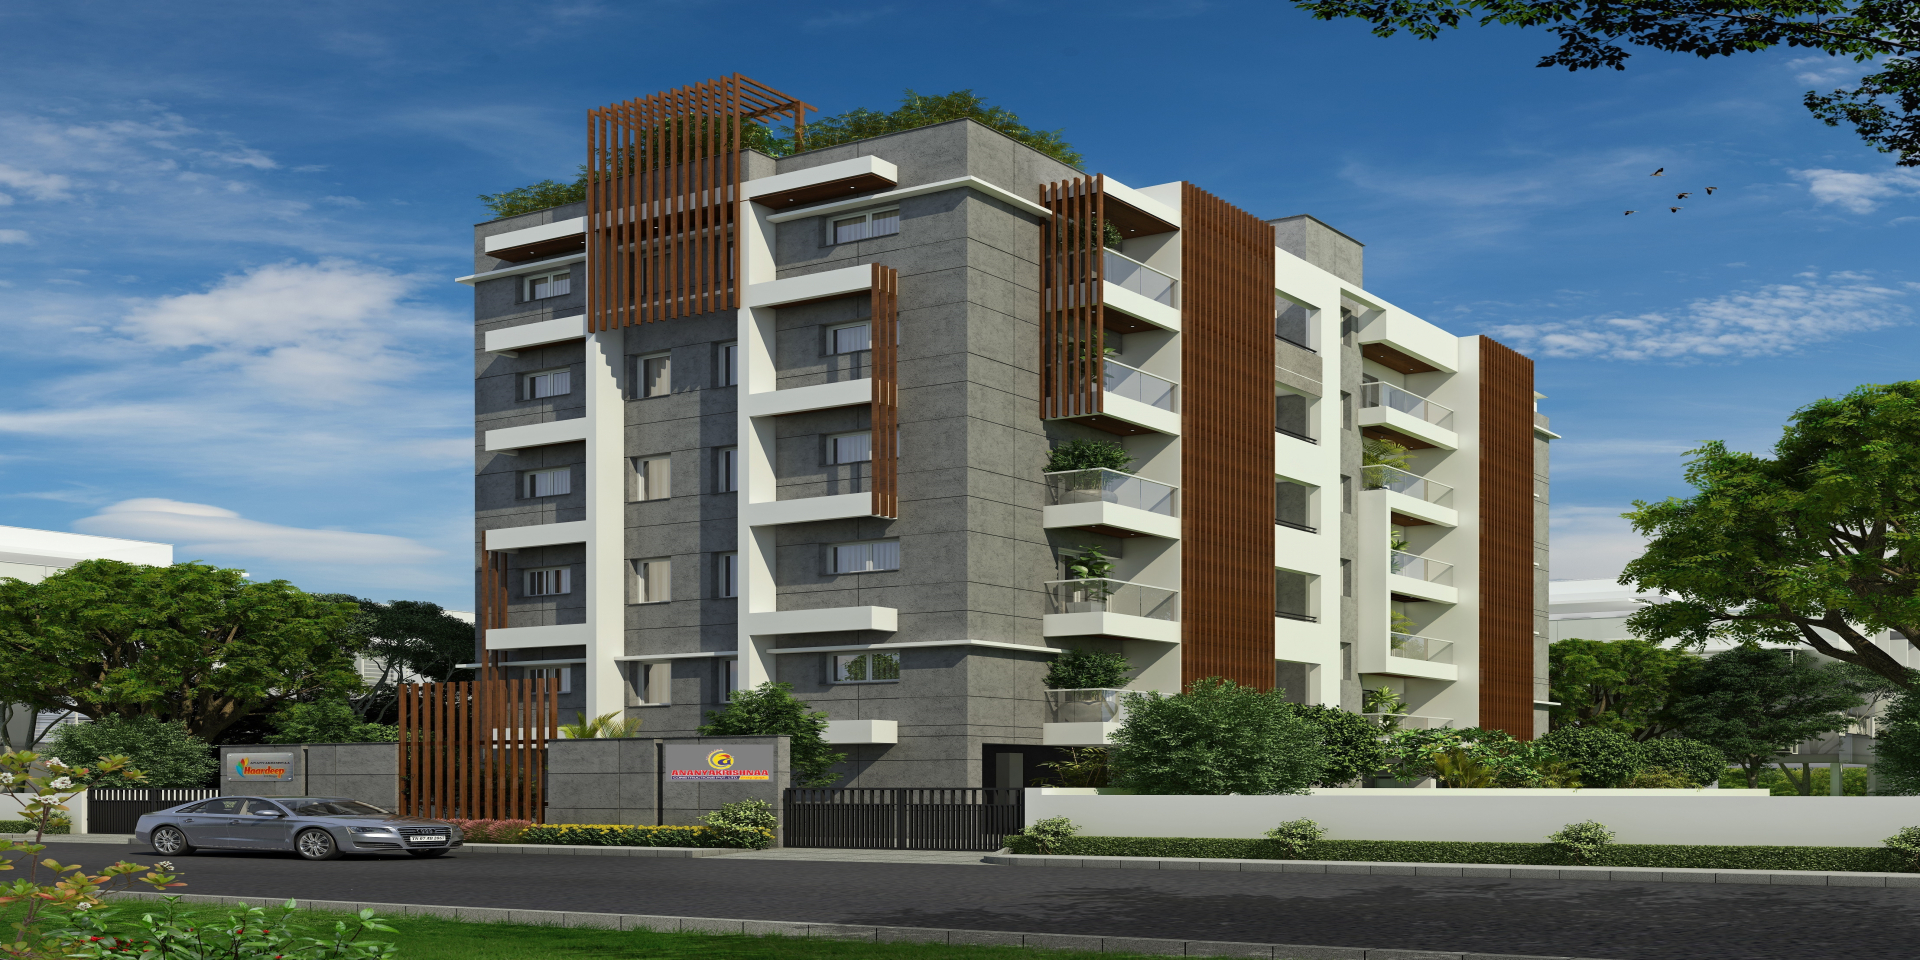 3, 5 BHK Apartment for sale in K K Nagar